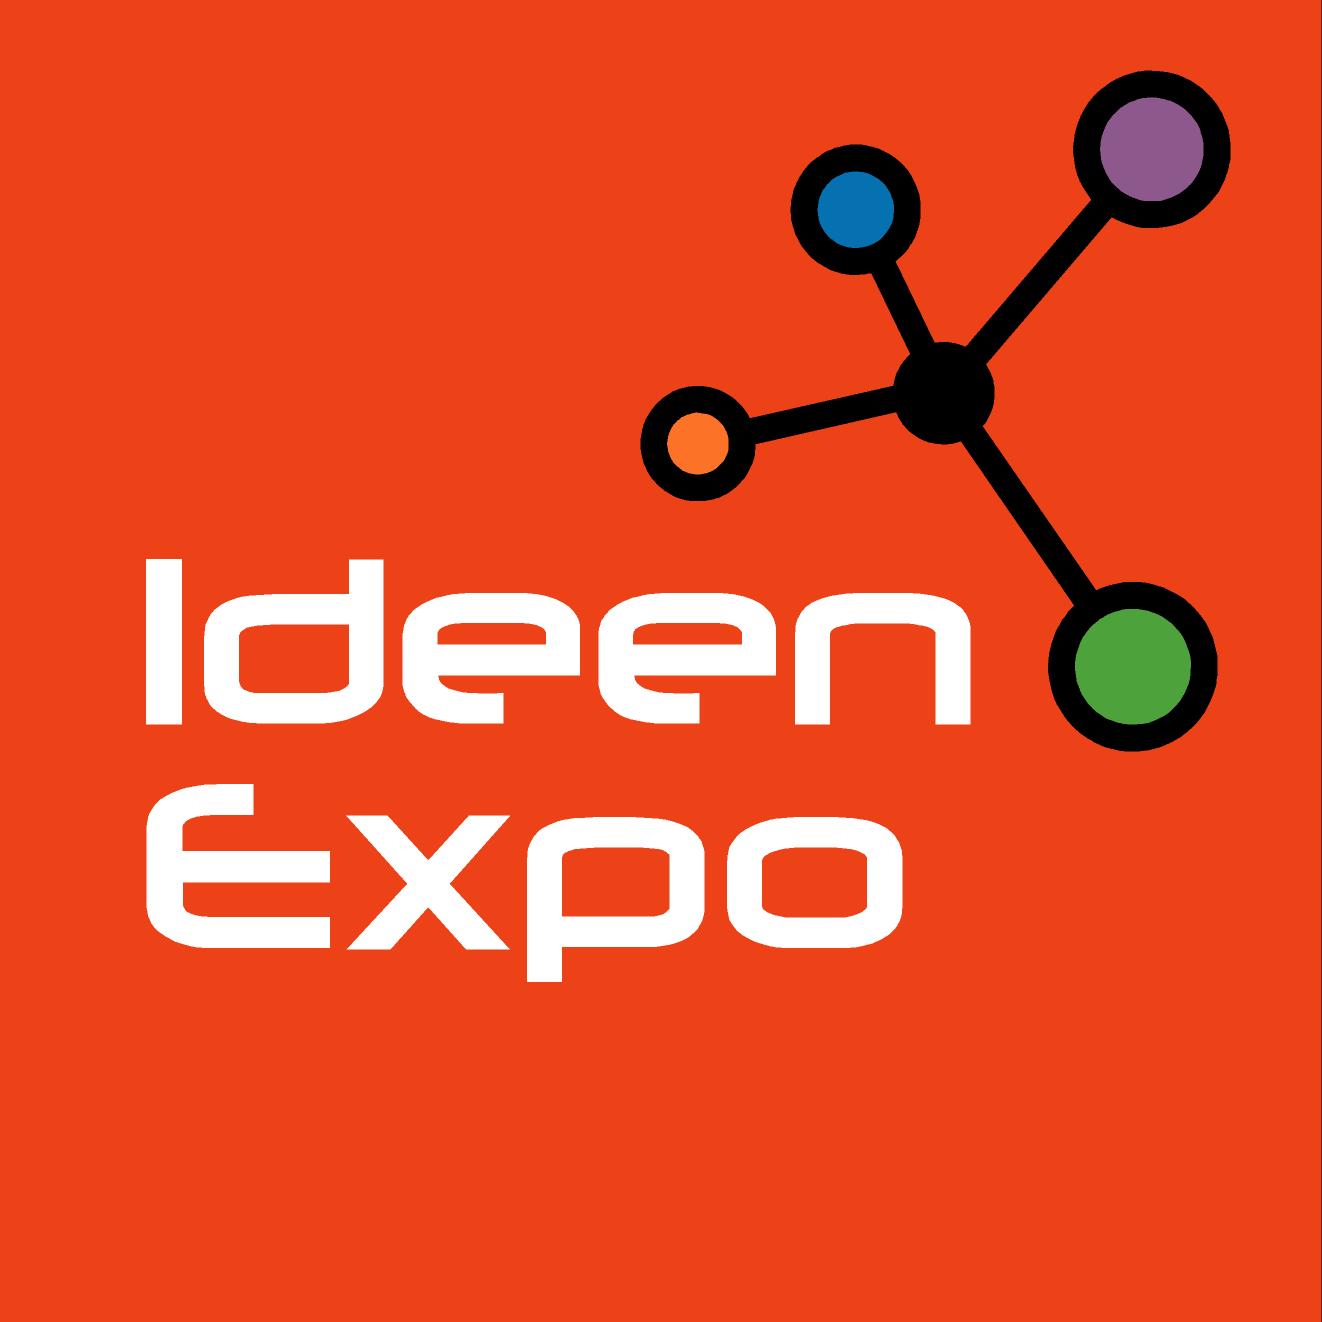 Logo der IdeenExpo